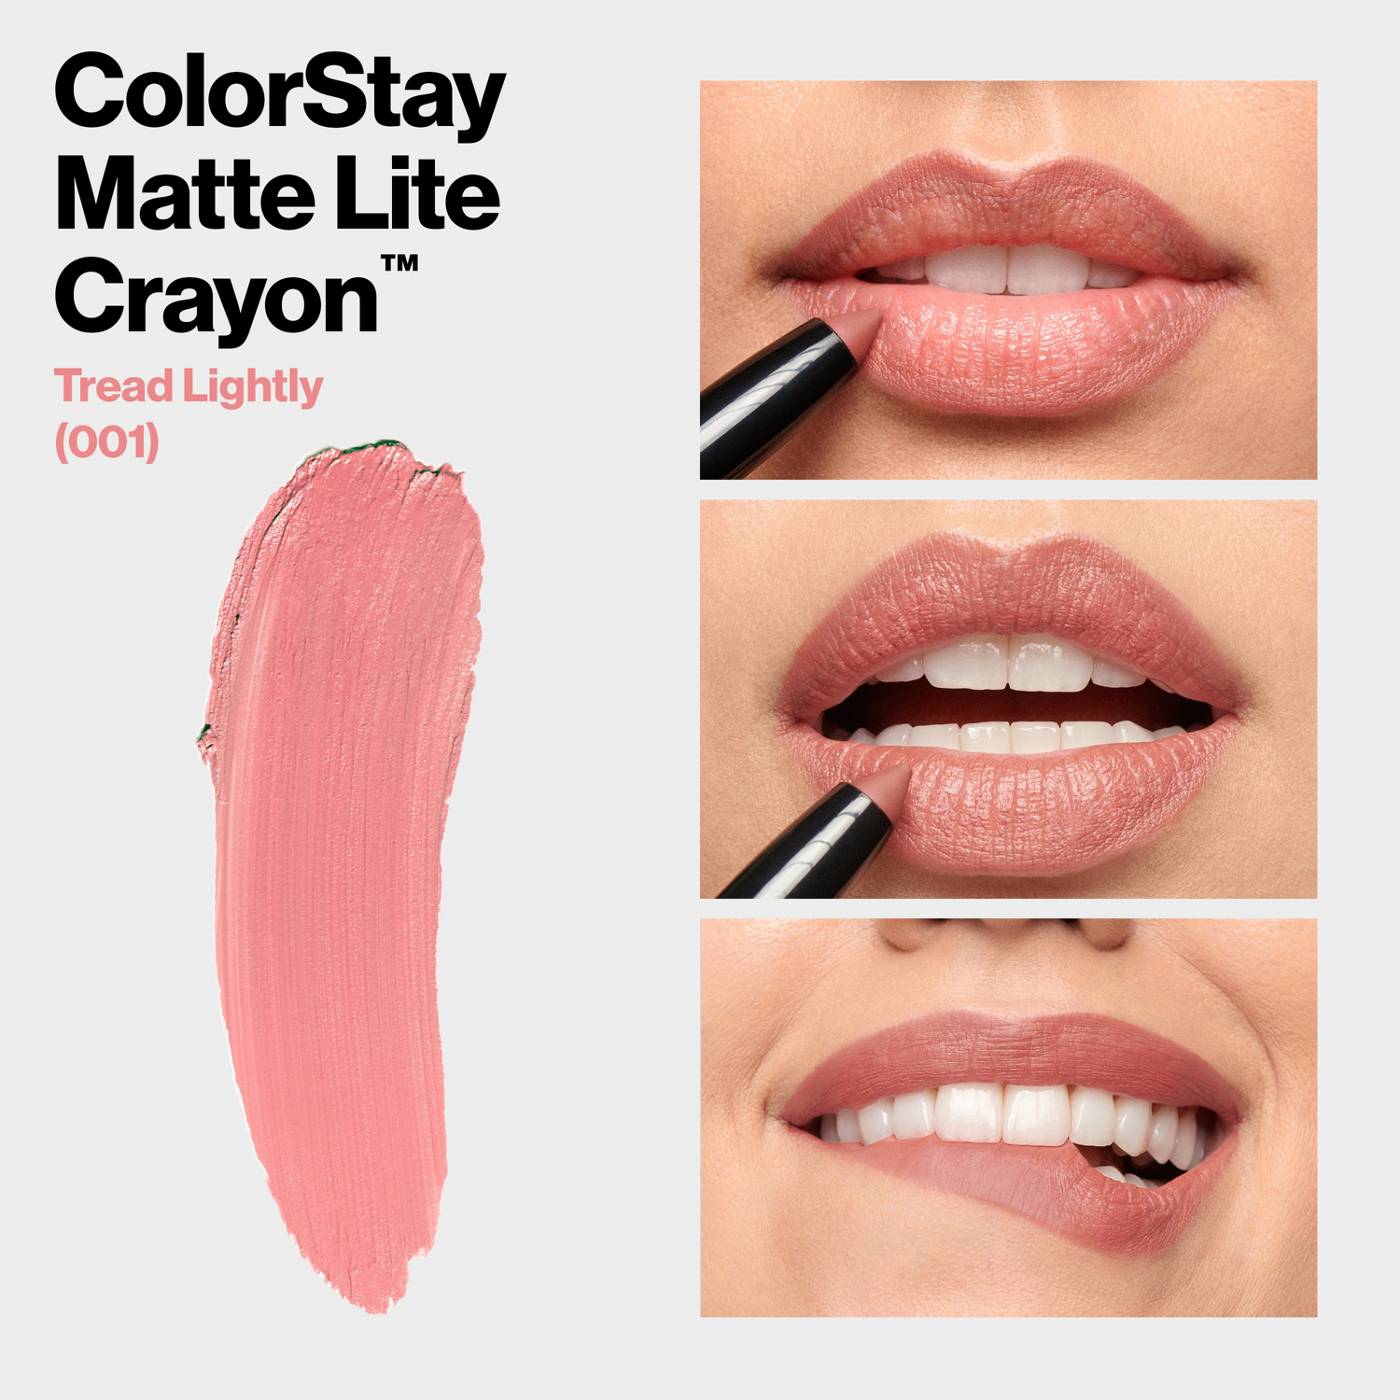 Revlon ColorStay Matte Lite Crayon Lipstick - Tread Lightly; image 5 of 7